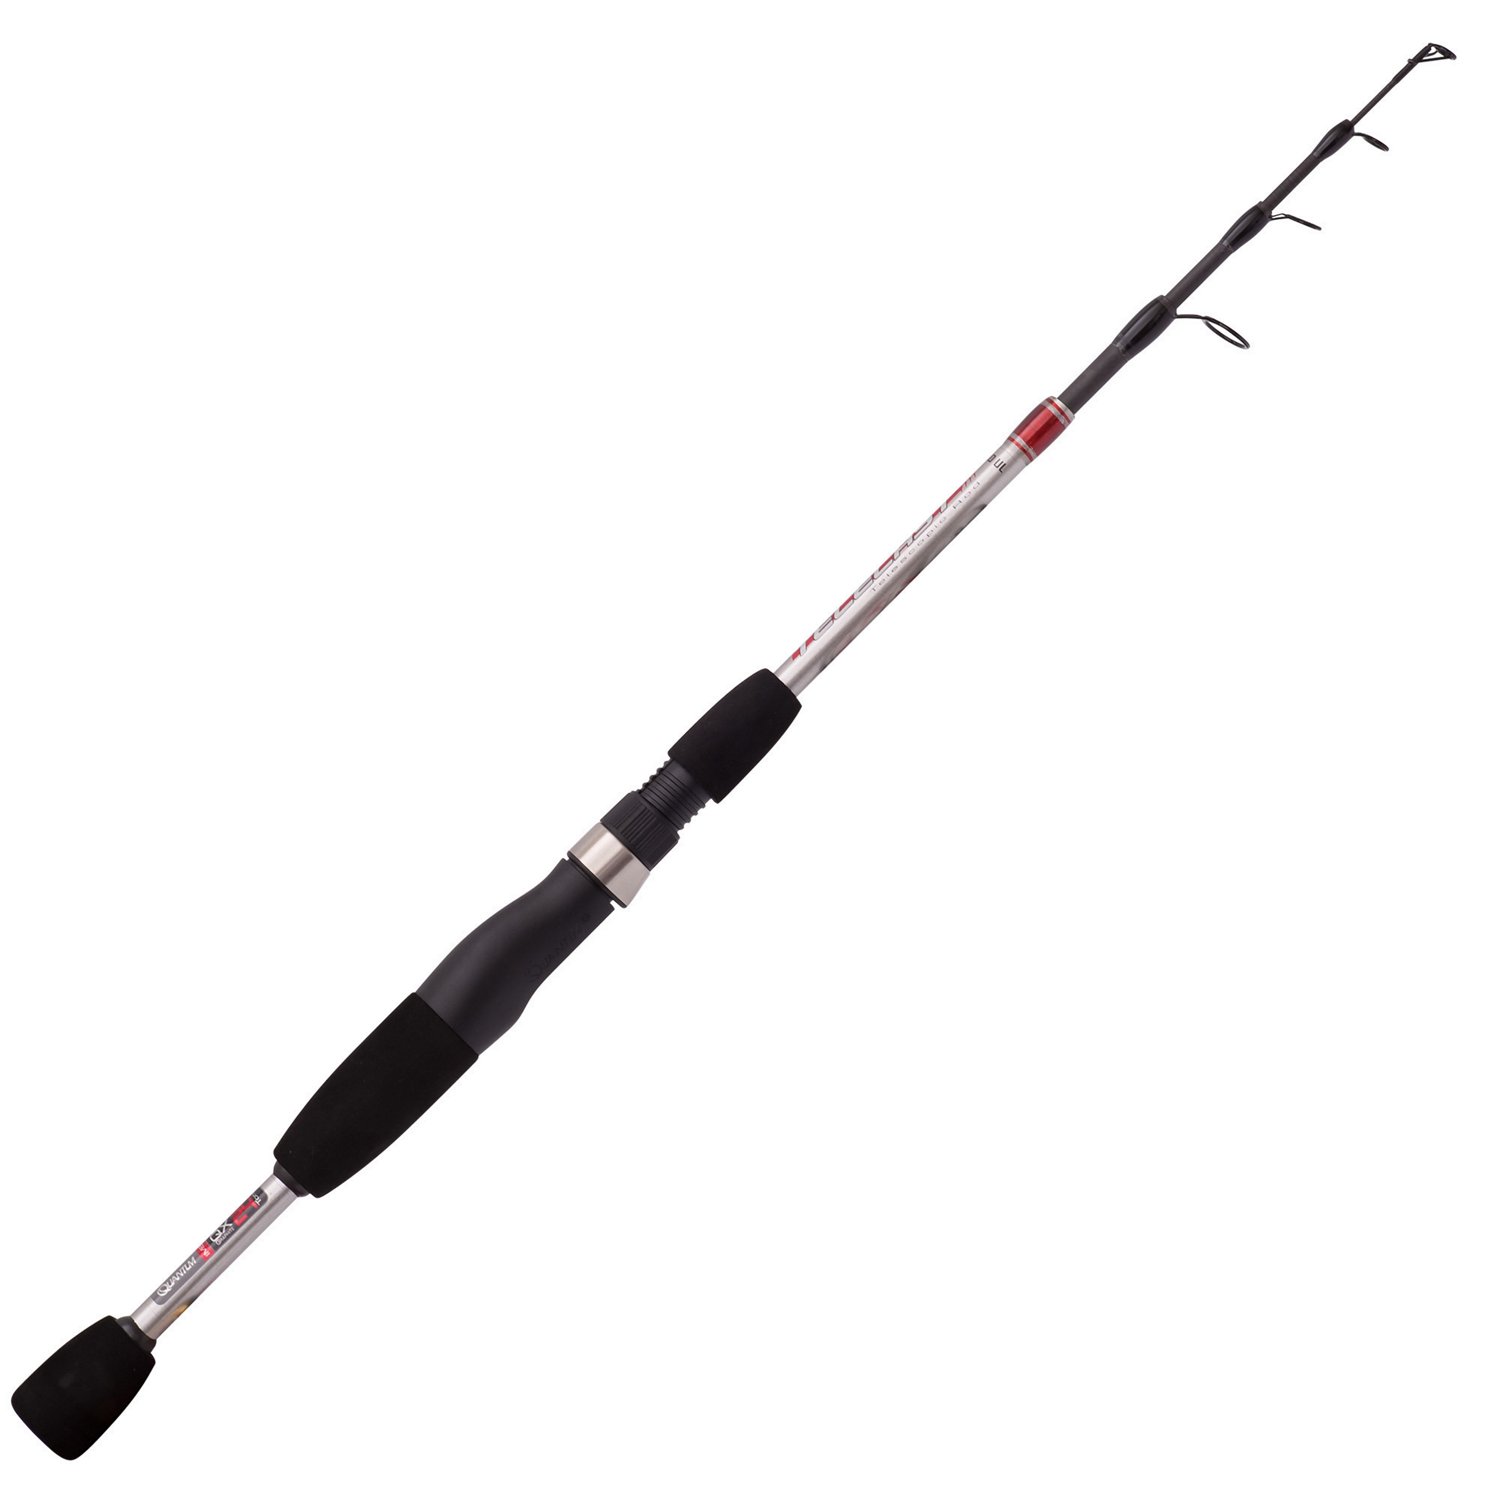 Portable fishing rod Portable Fishing Pole Collapsible Rod